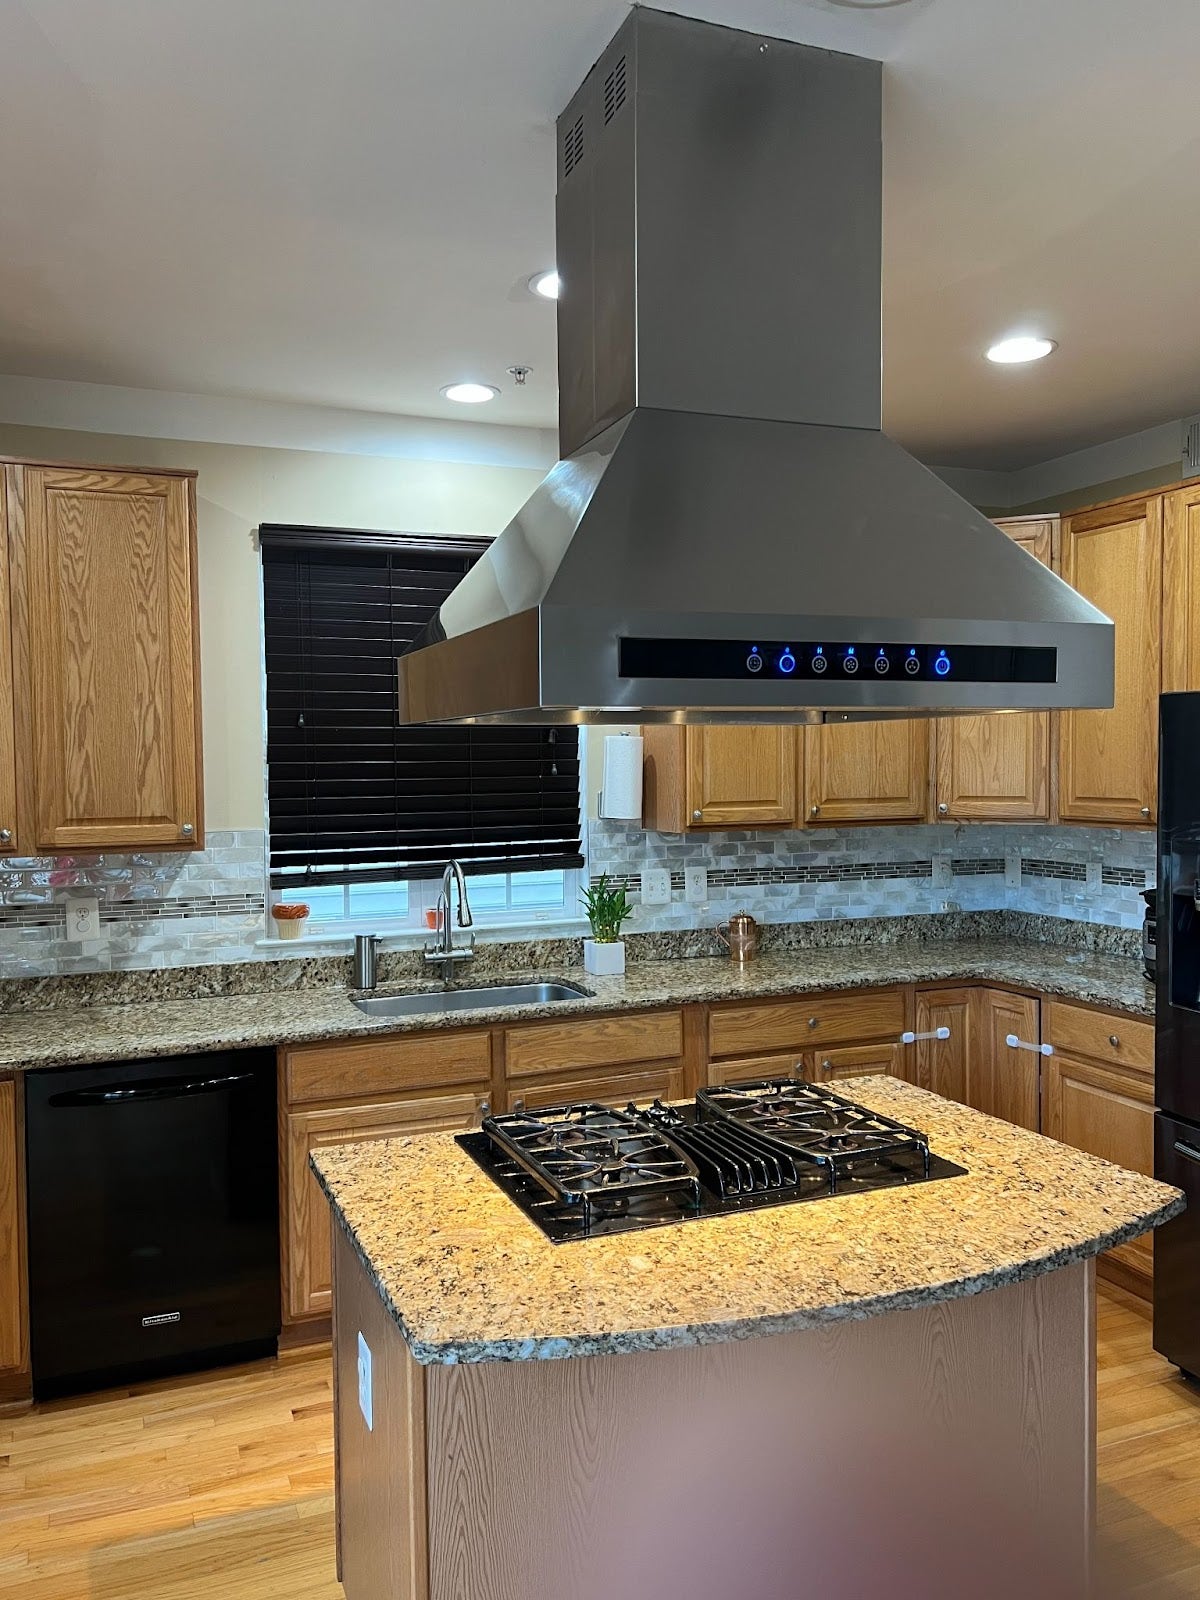 Open kitchen featuring a Proline range hood and stainless steel appliances. - Proline Range Hoods - prolinerangehoods.com 